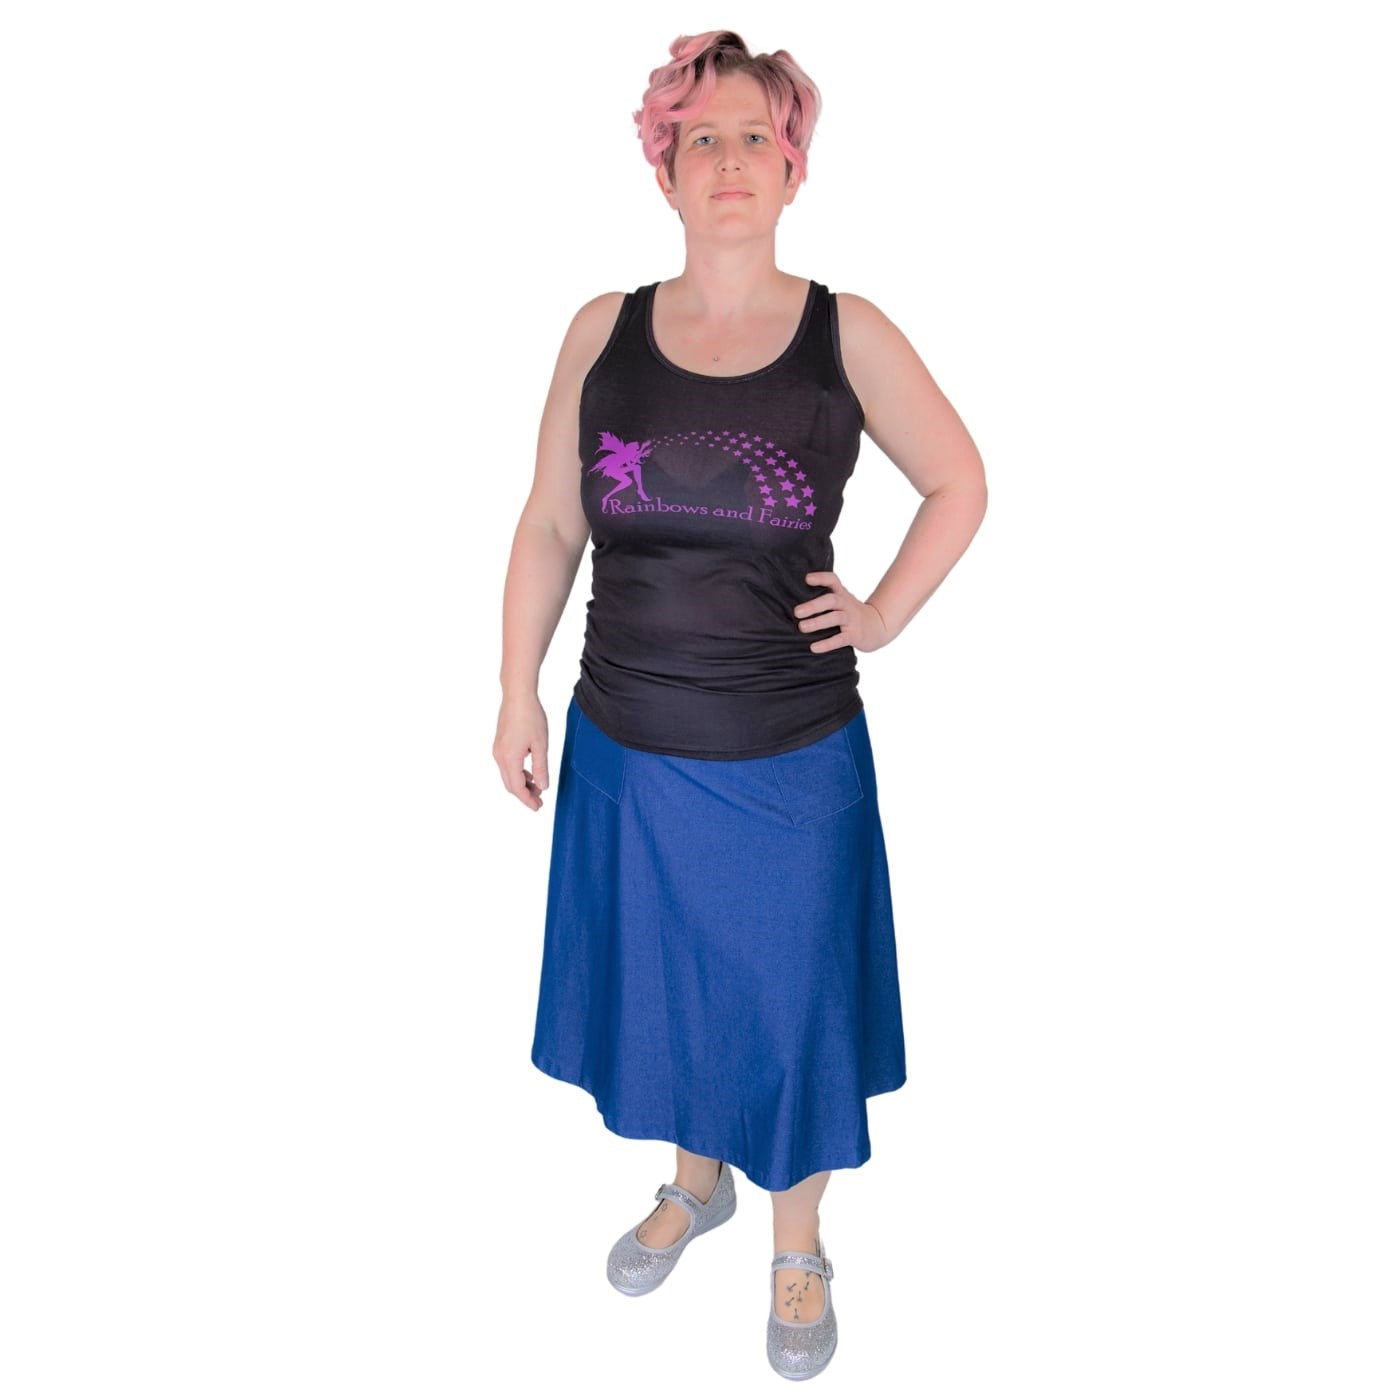 Blue Denim Original Skirt by RainbowsAndFairies.com.au (Denim Skirt - Jean - Skirt With Pockets - Aline - Vintage Inspired - Kitsch) - SKU: CL_OSKRT_DENIM_BLU - Pic-03